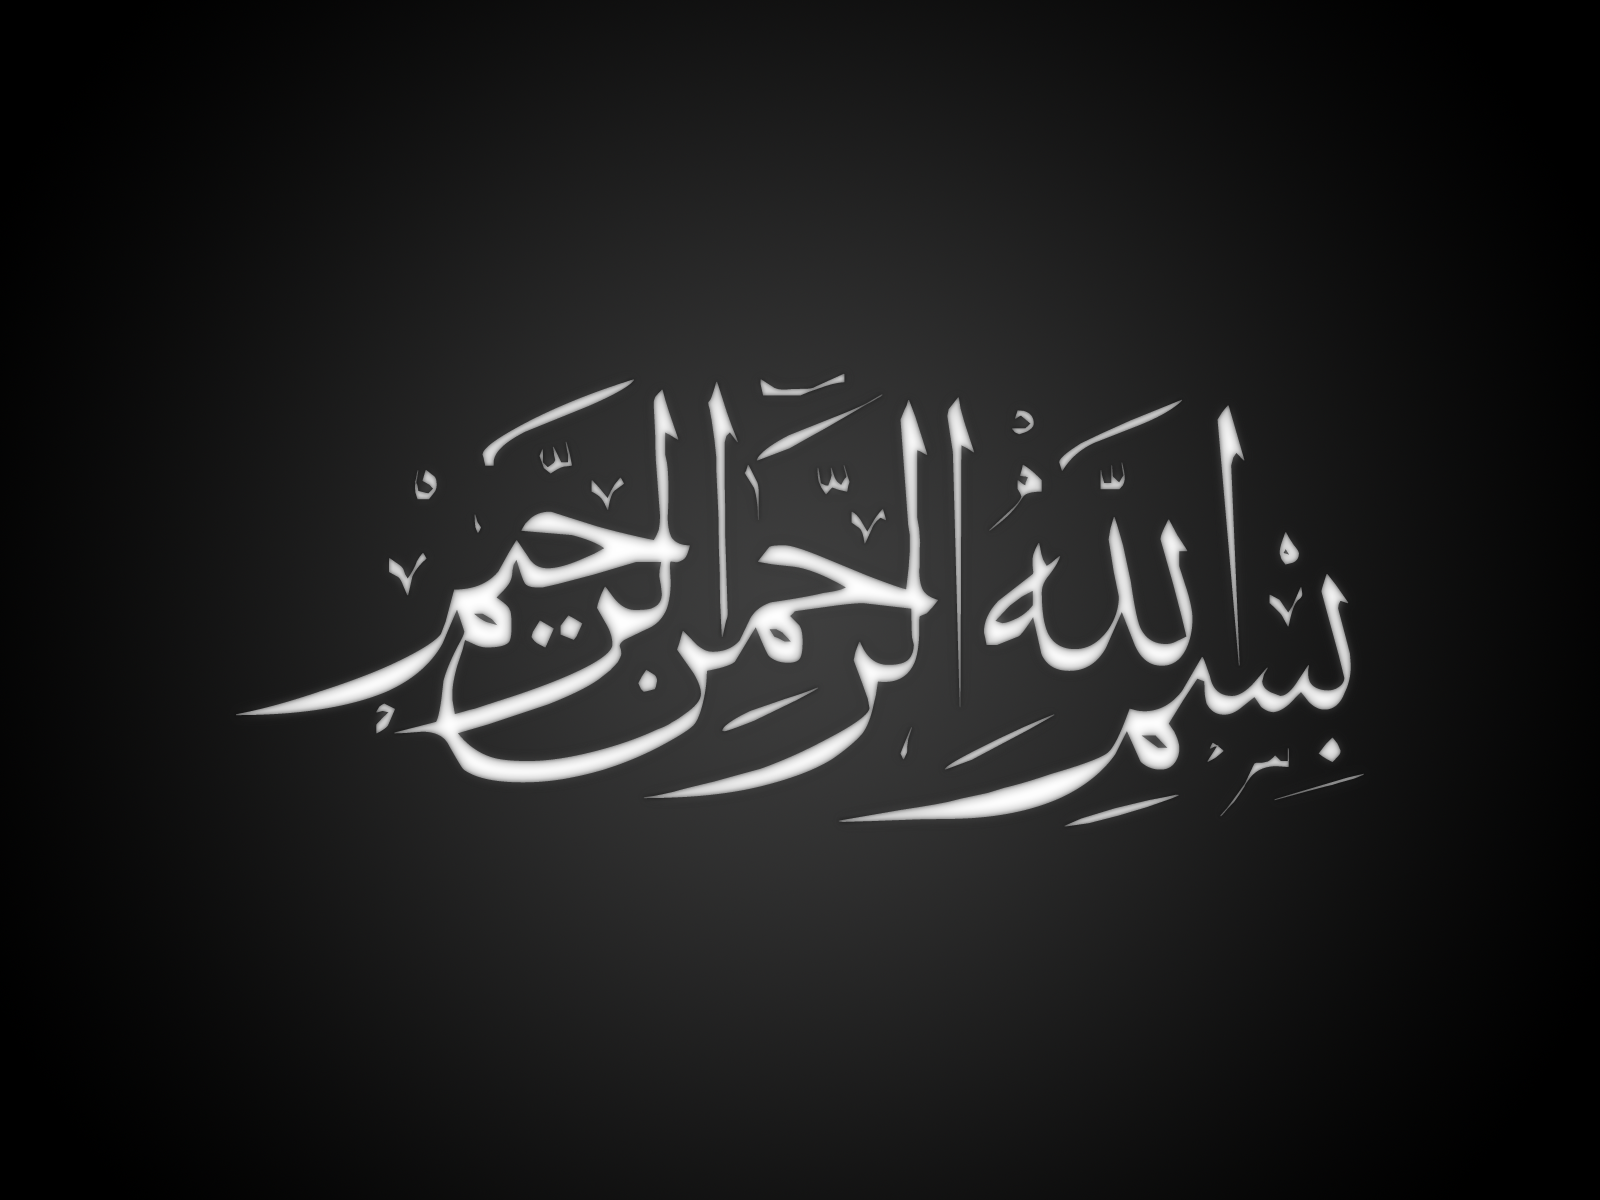 bismillah in arabic font copy and paste